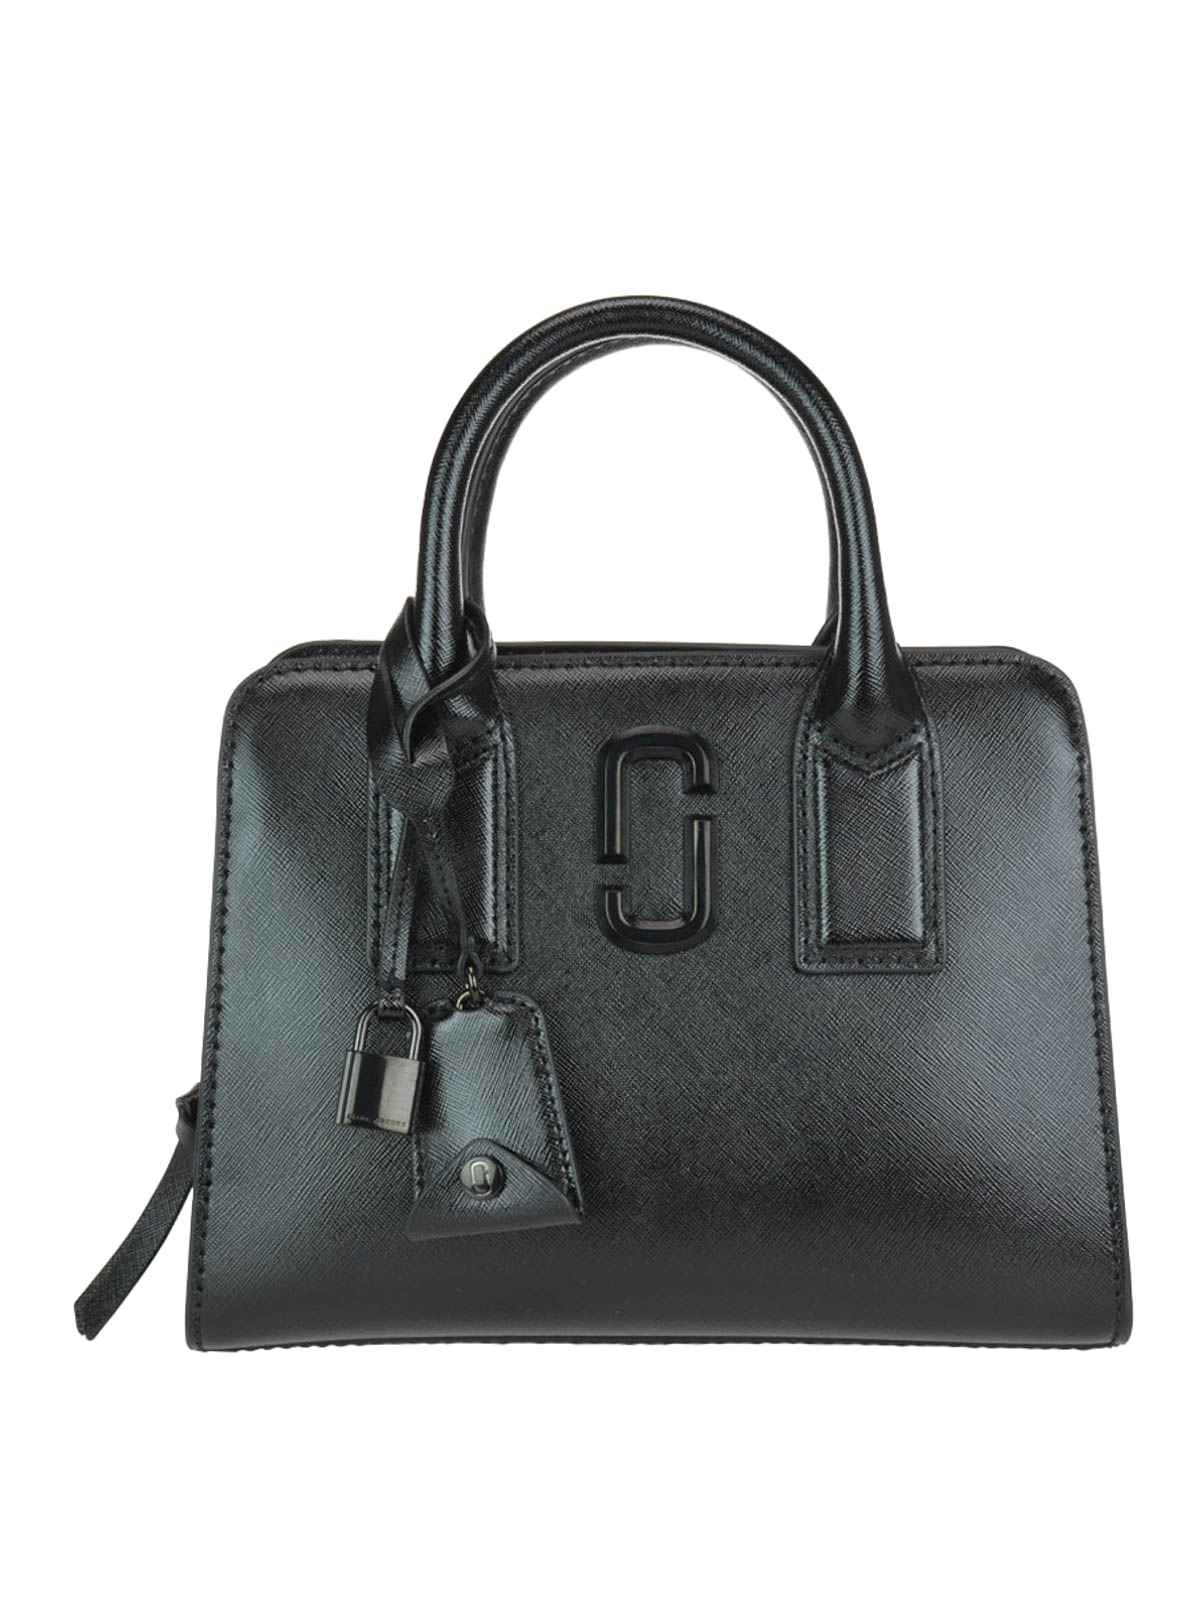 Totes bags Marc Jacobs - Big Shot DTM S black leather tote bag ...